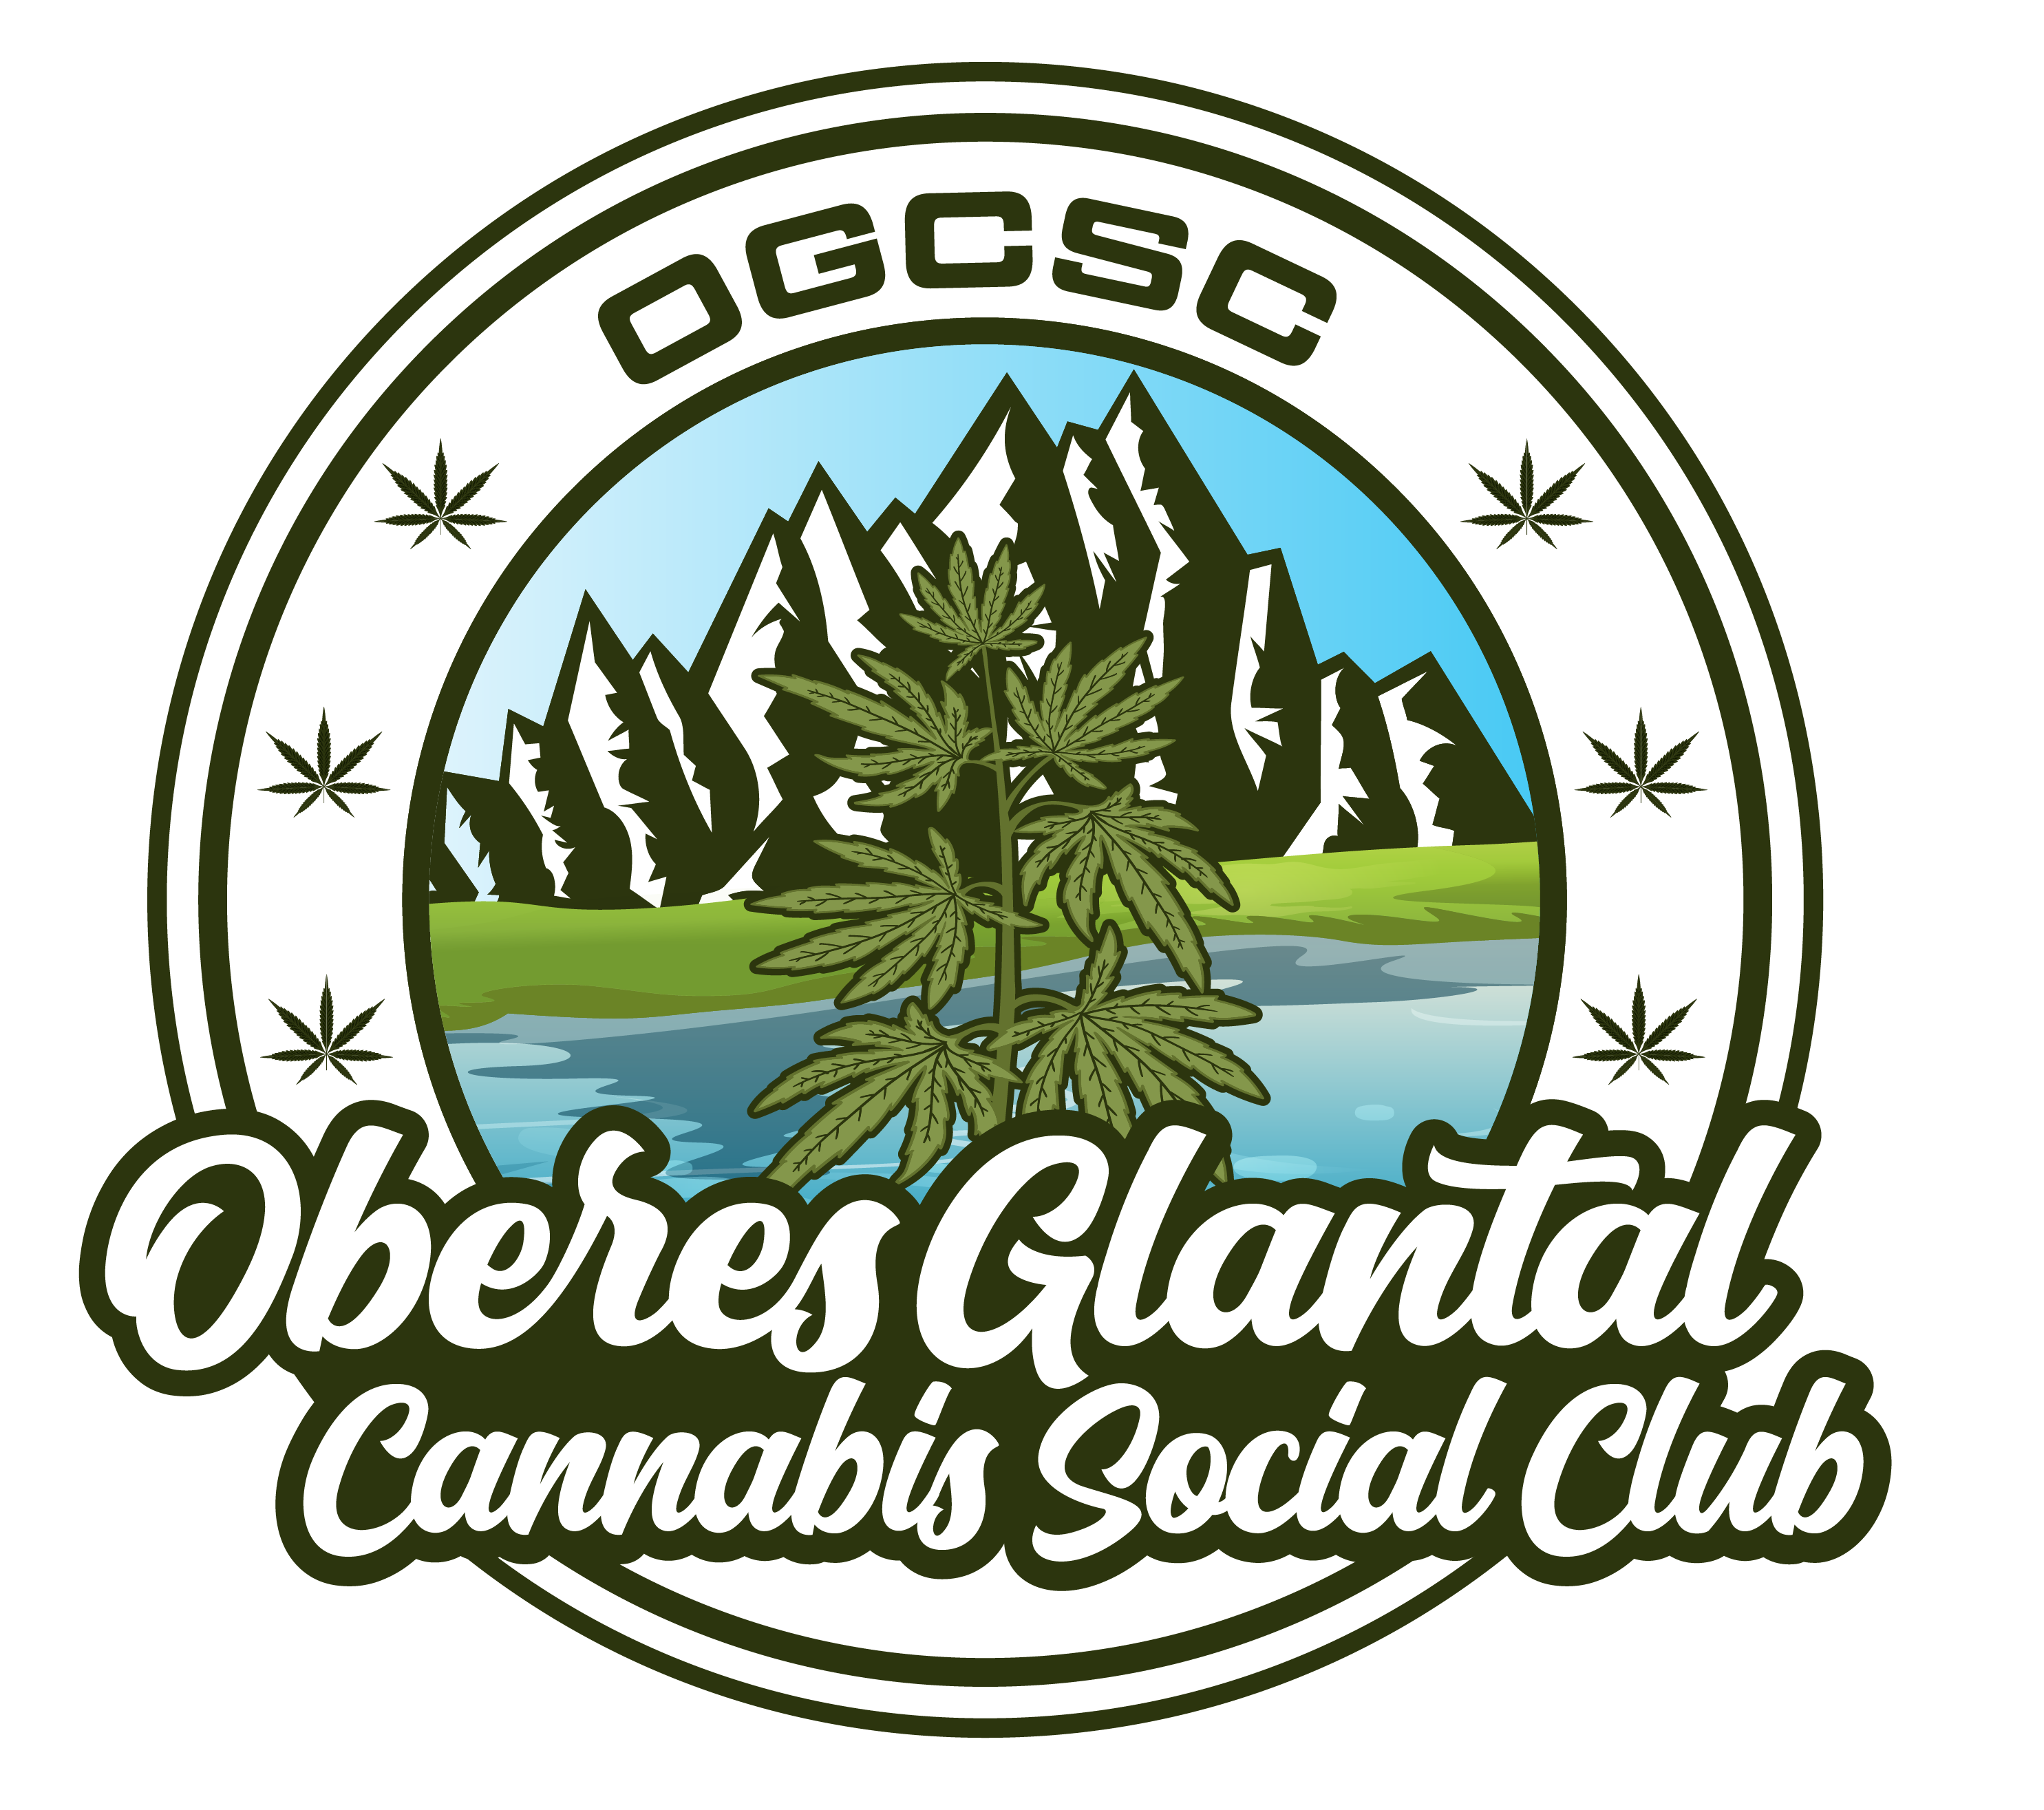 Oberes Glantal Cannabis Social Club